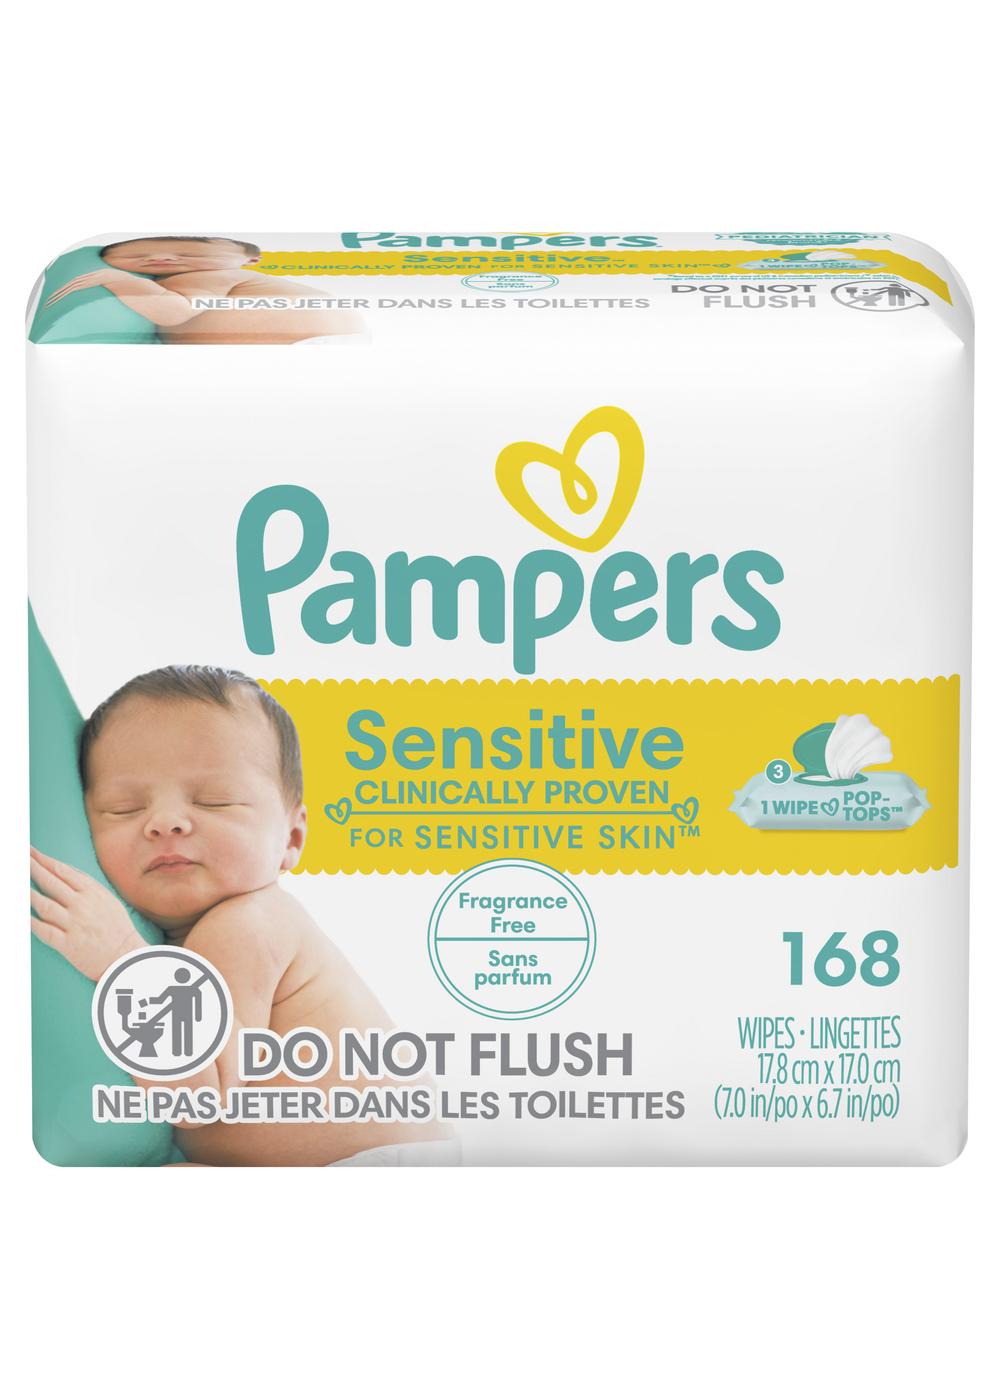 Pampers Sensitive Skin Baby Wipes Refills 3 Pk; image 1 of 9